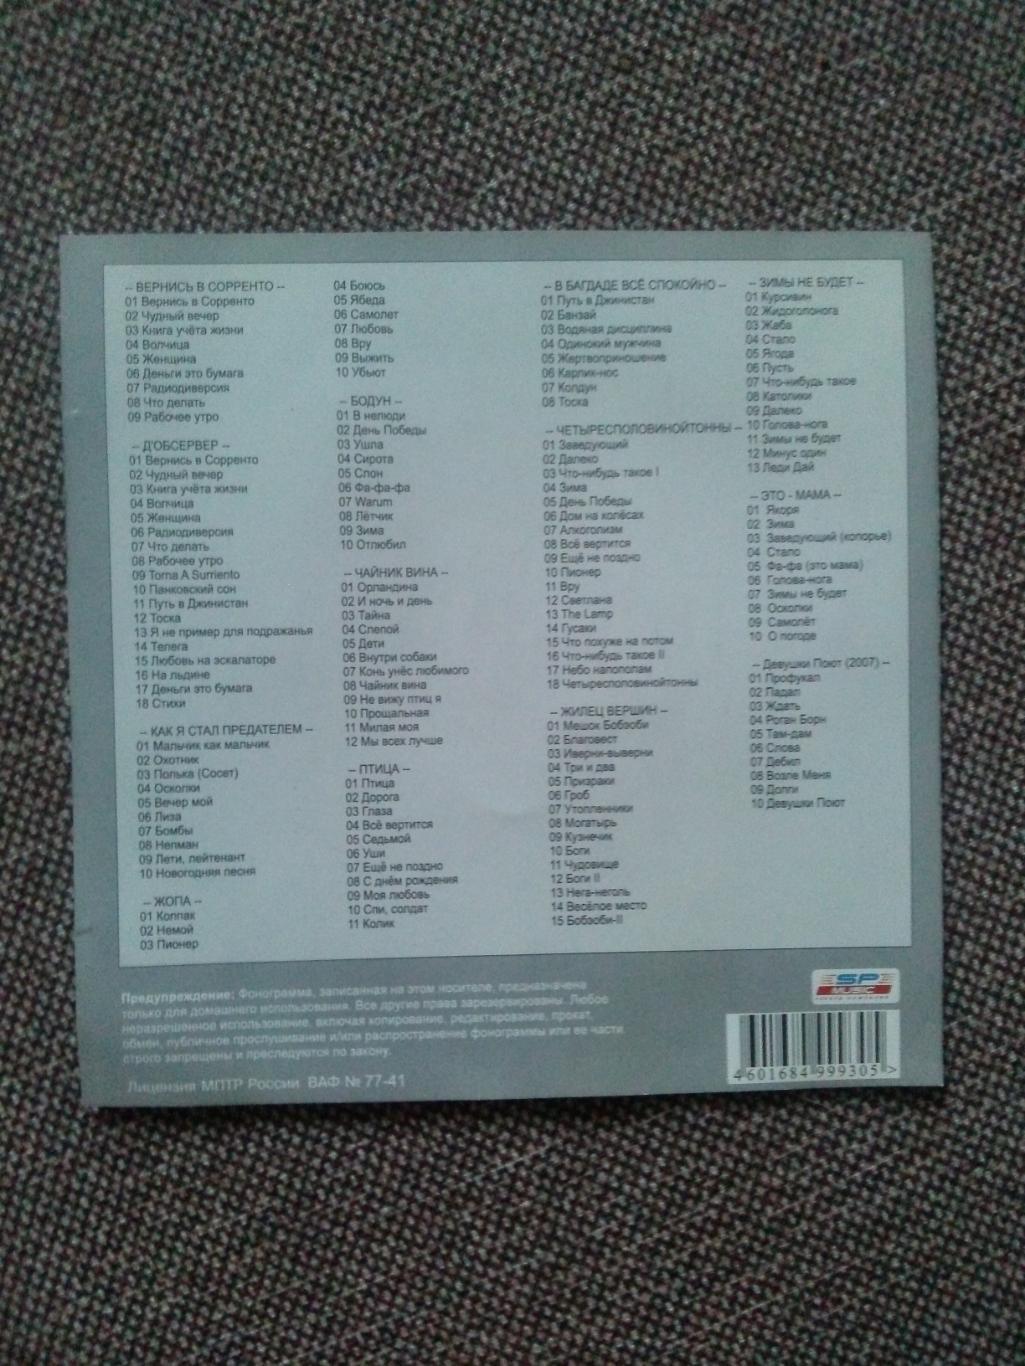 MP - 3 CD диск : группаАукцыон13 альбомов (Русская рок - музыка) 1